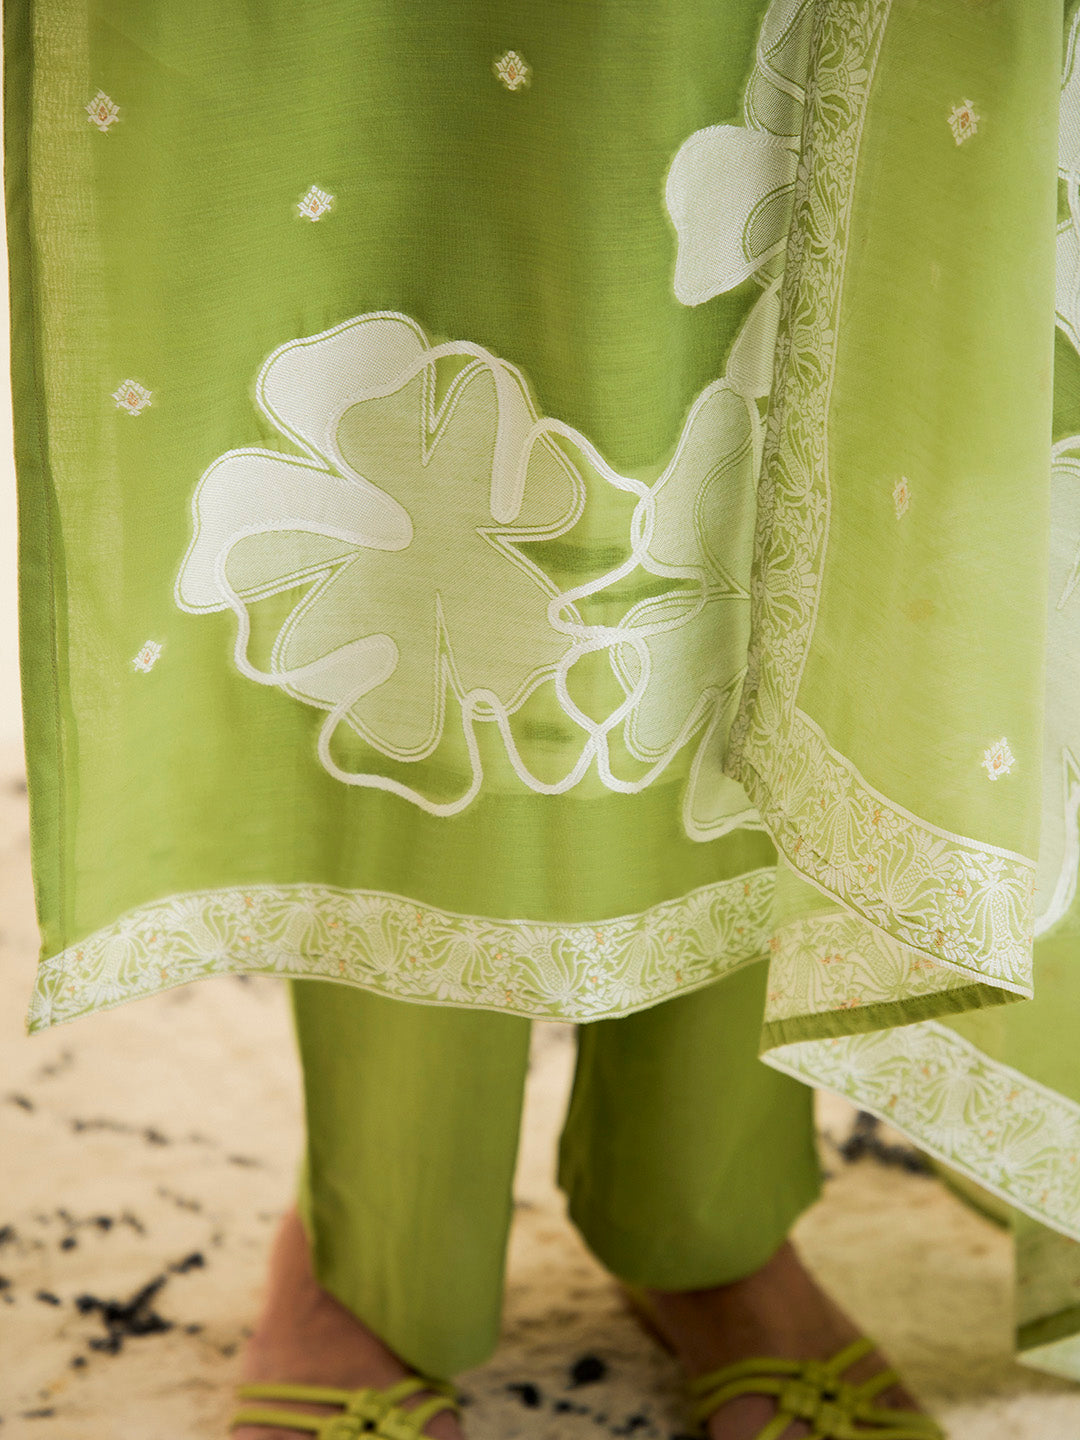 Green Chanderi Jacquard Floral Self-Woven Suit Set